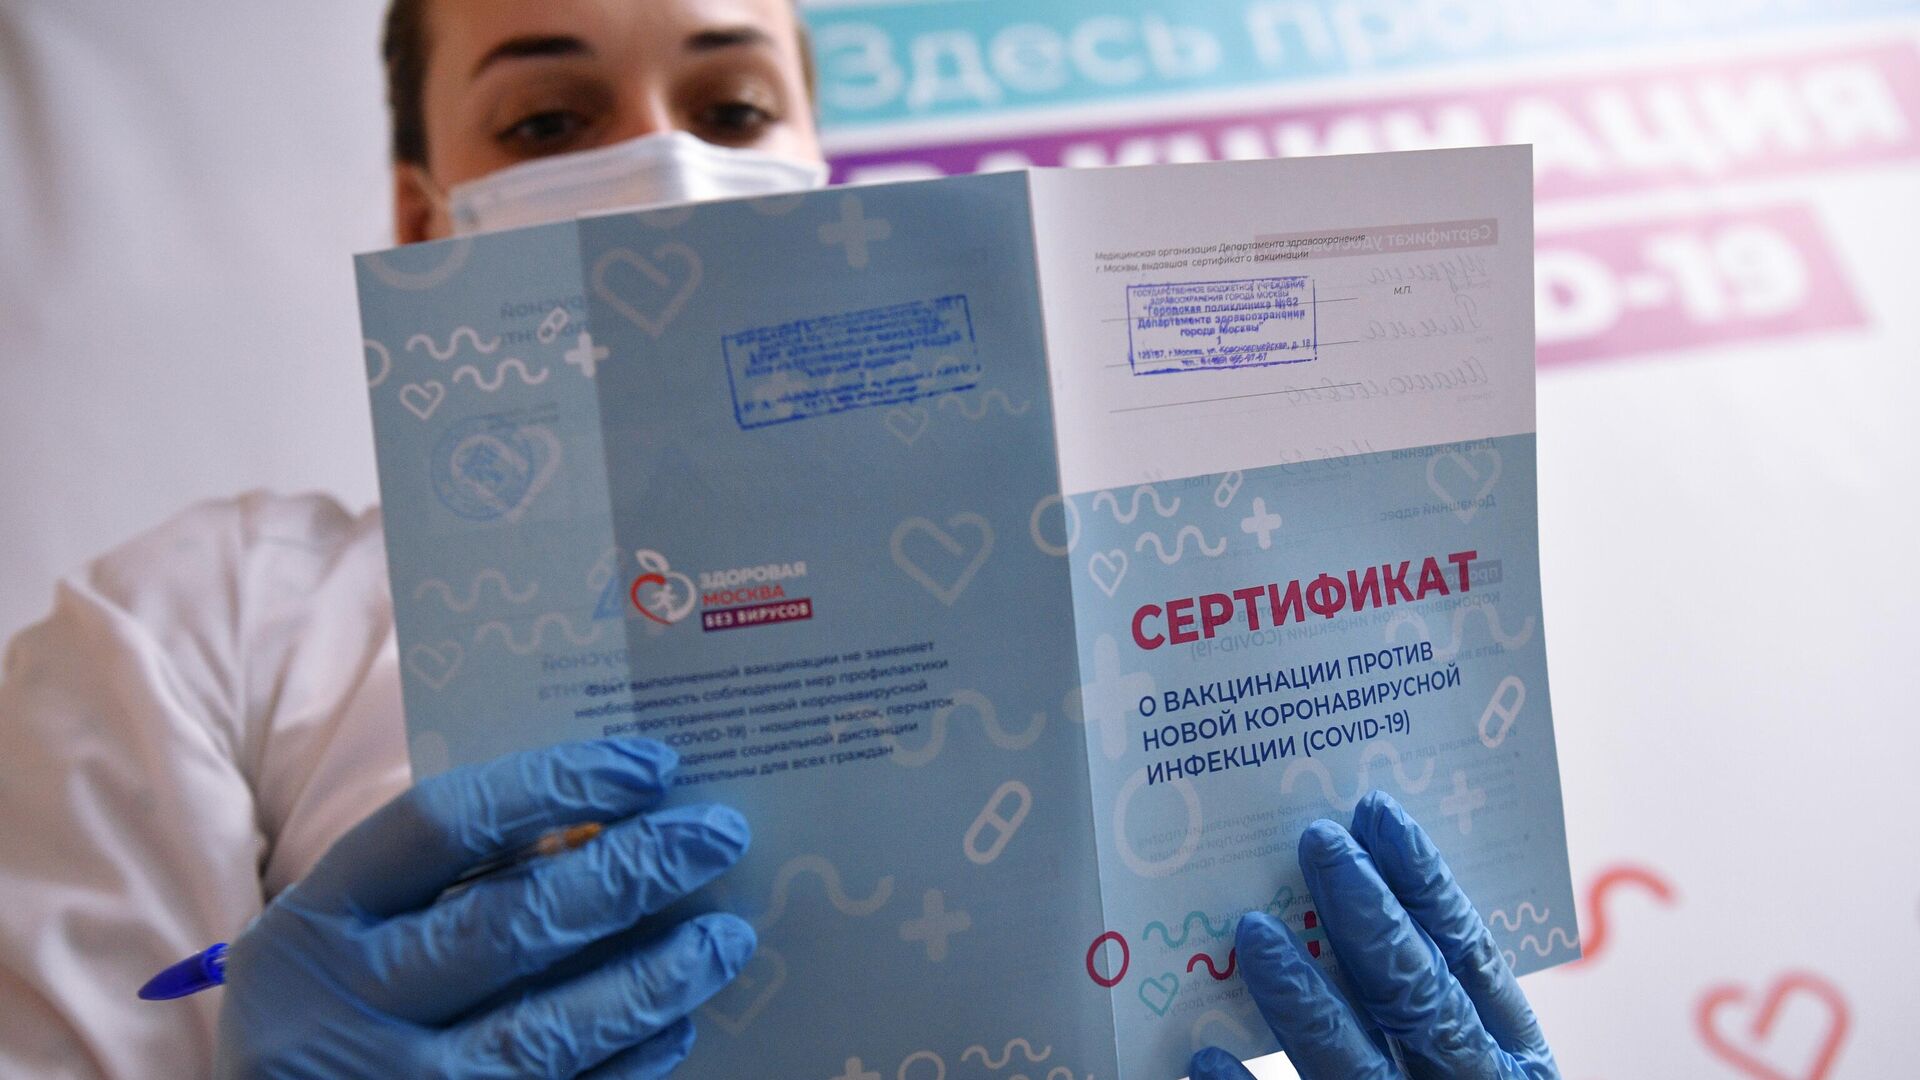 Сертификат о вакцинации против коронавирусной инфекции (COVID-19) - РИА Новости, 1920, 21.02.2022